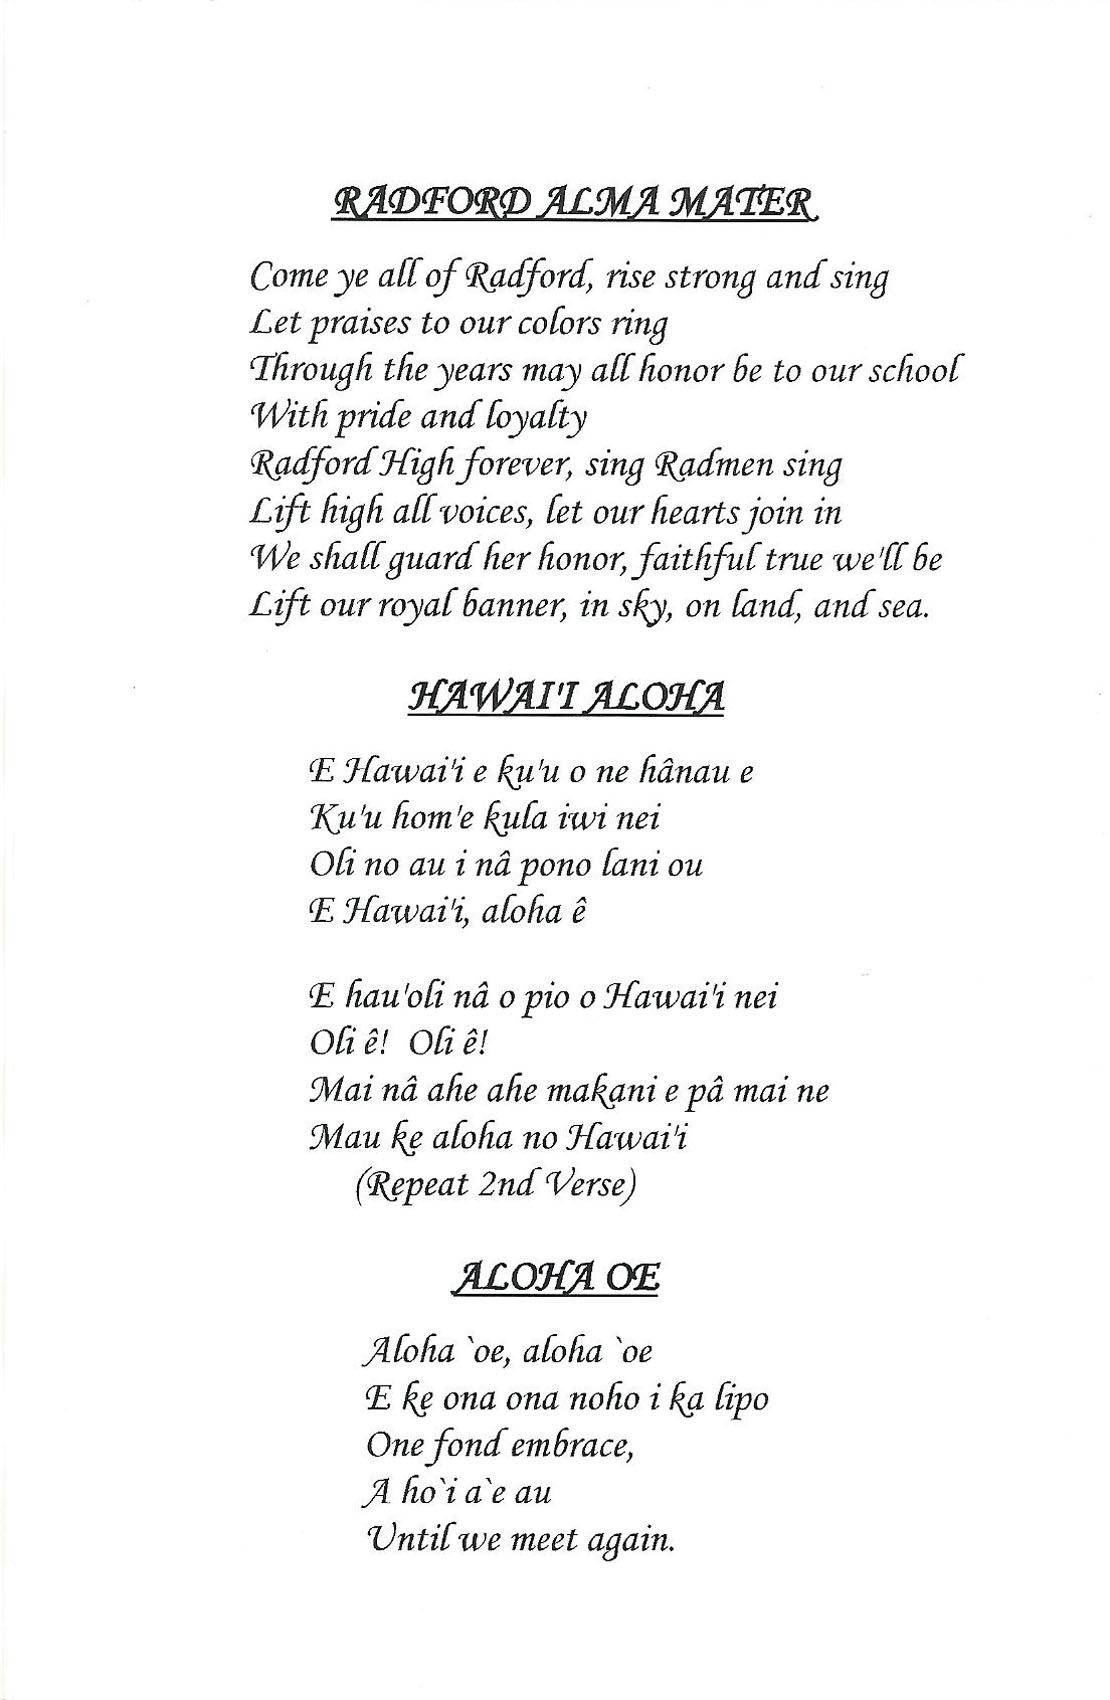 Lyrics ~ Radford Alma Mater, Hawaii Aloha, Aloha Oe